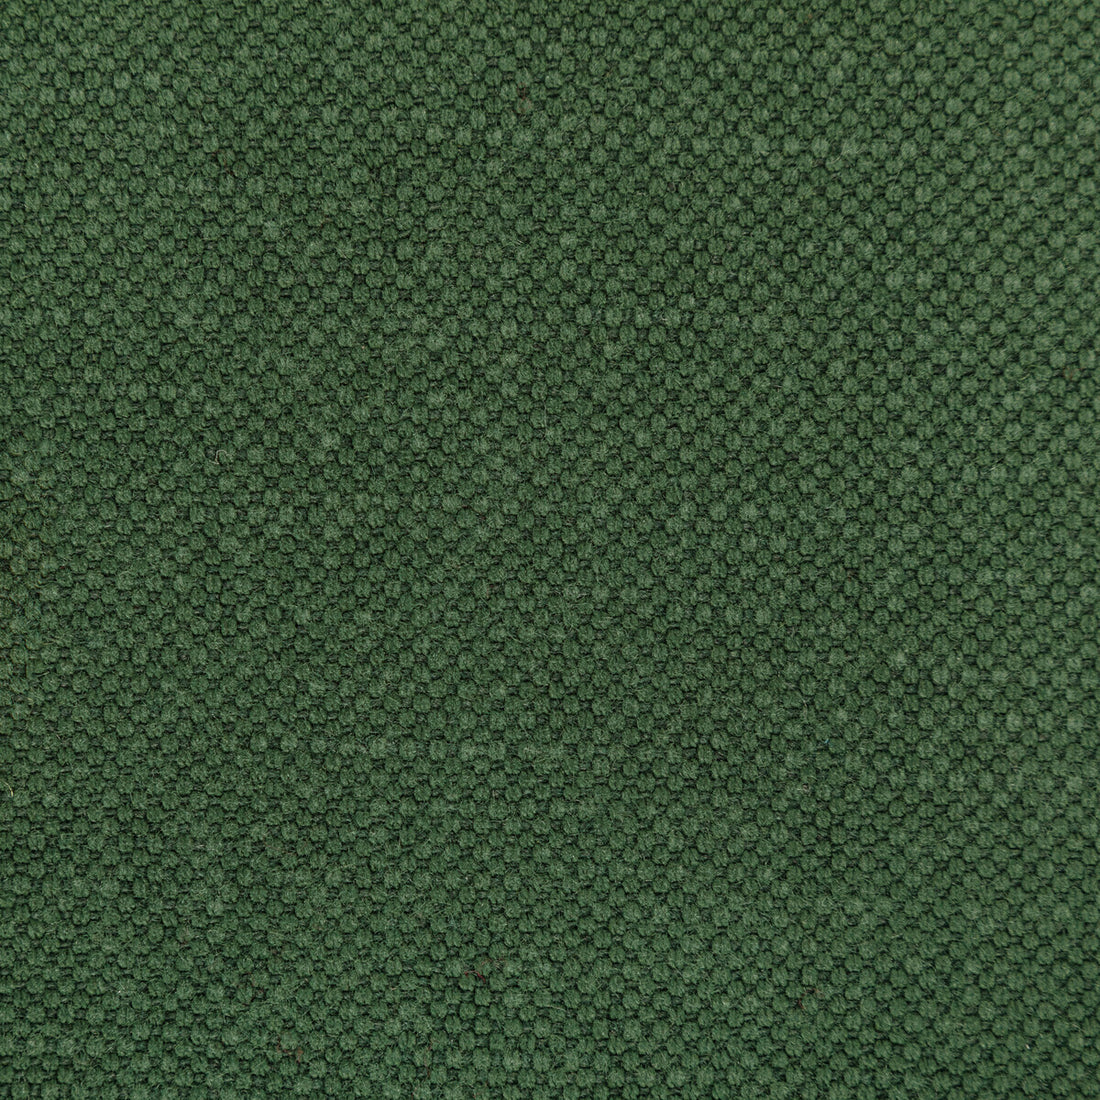 Carson fabric in envy color - pattern 36282.350.0 - by Kravet Basics